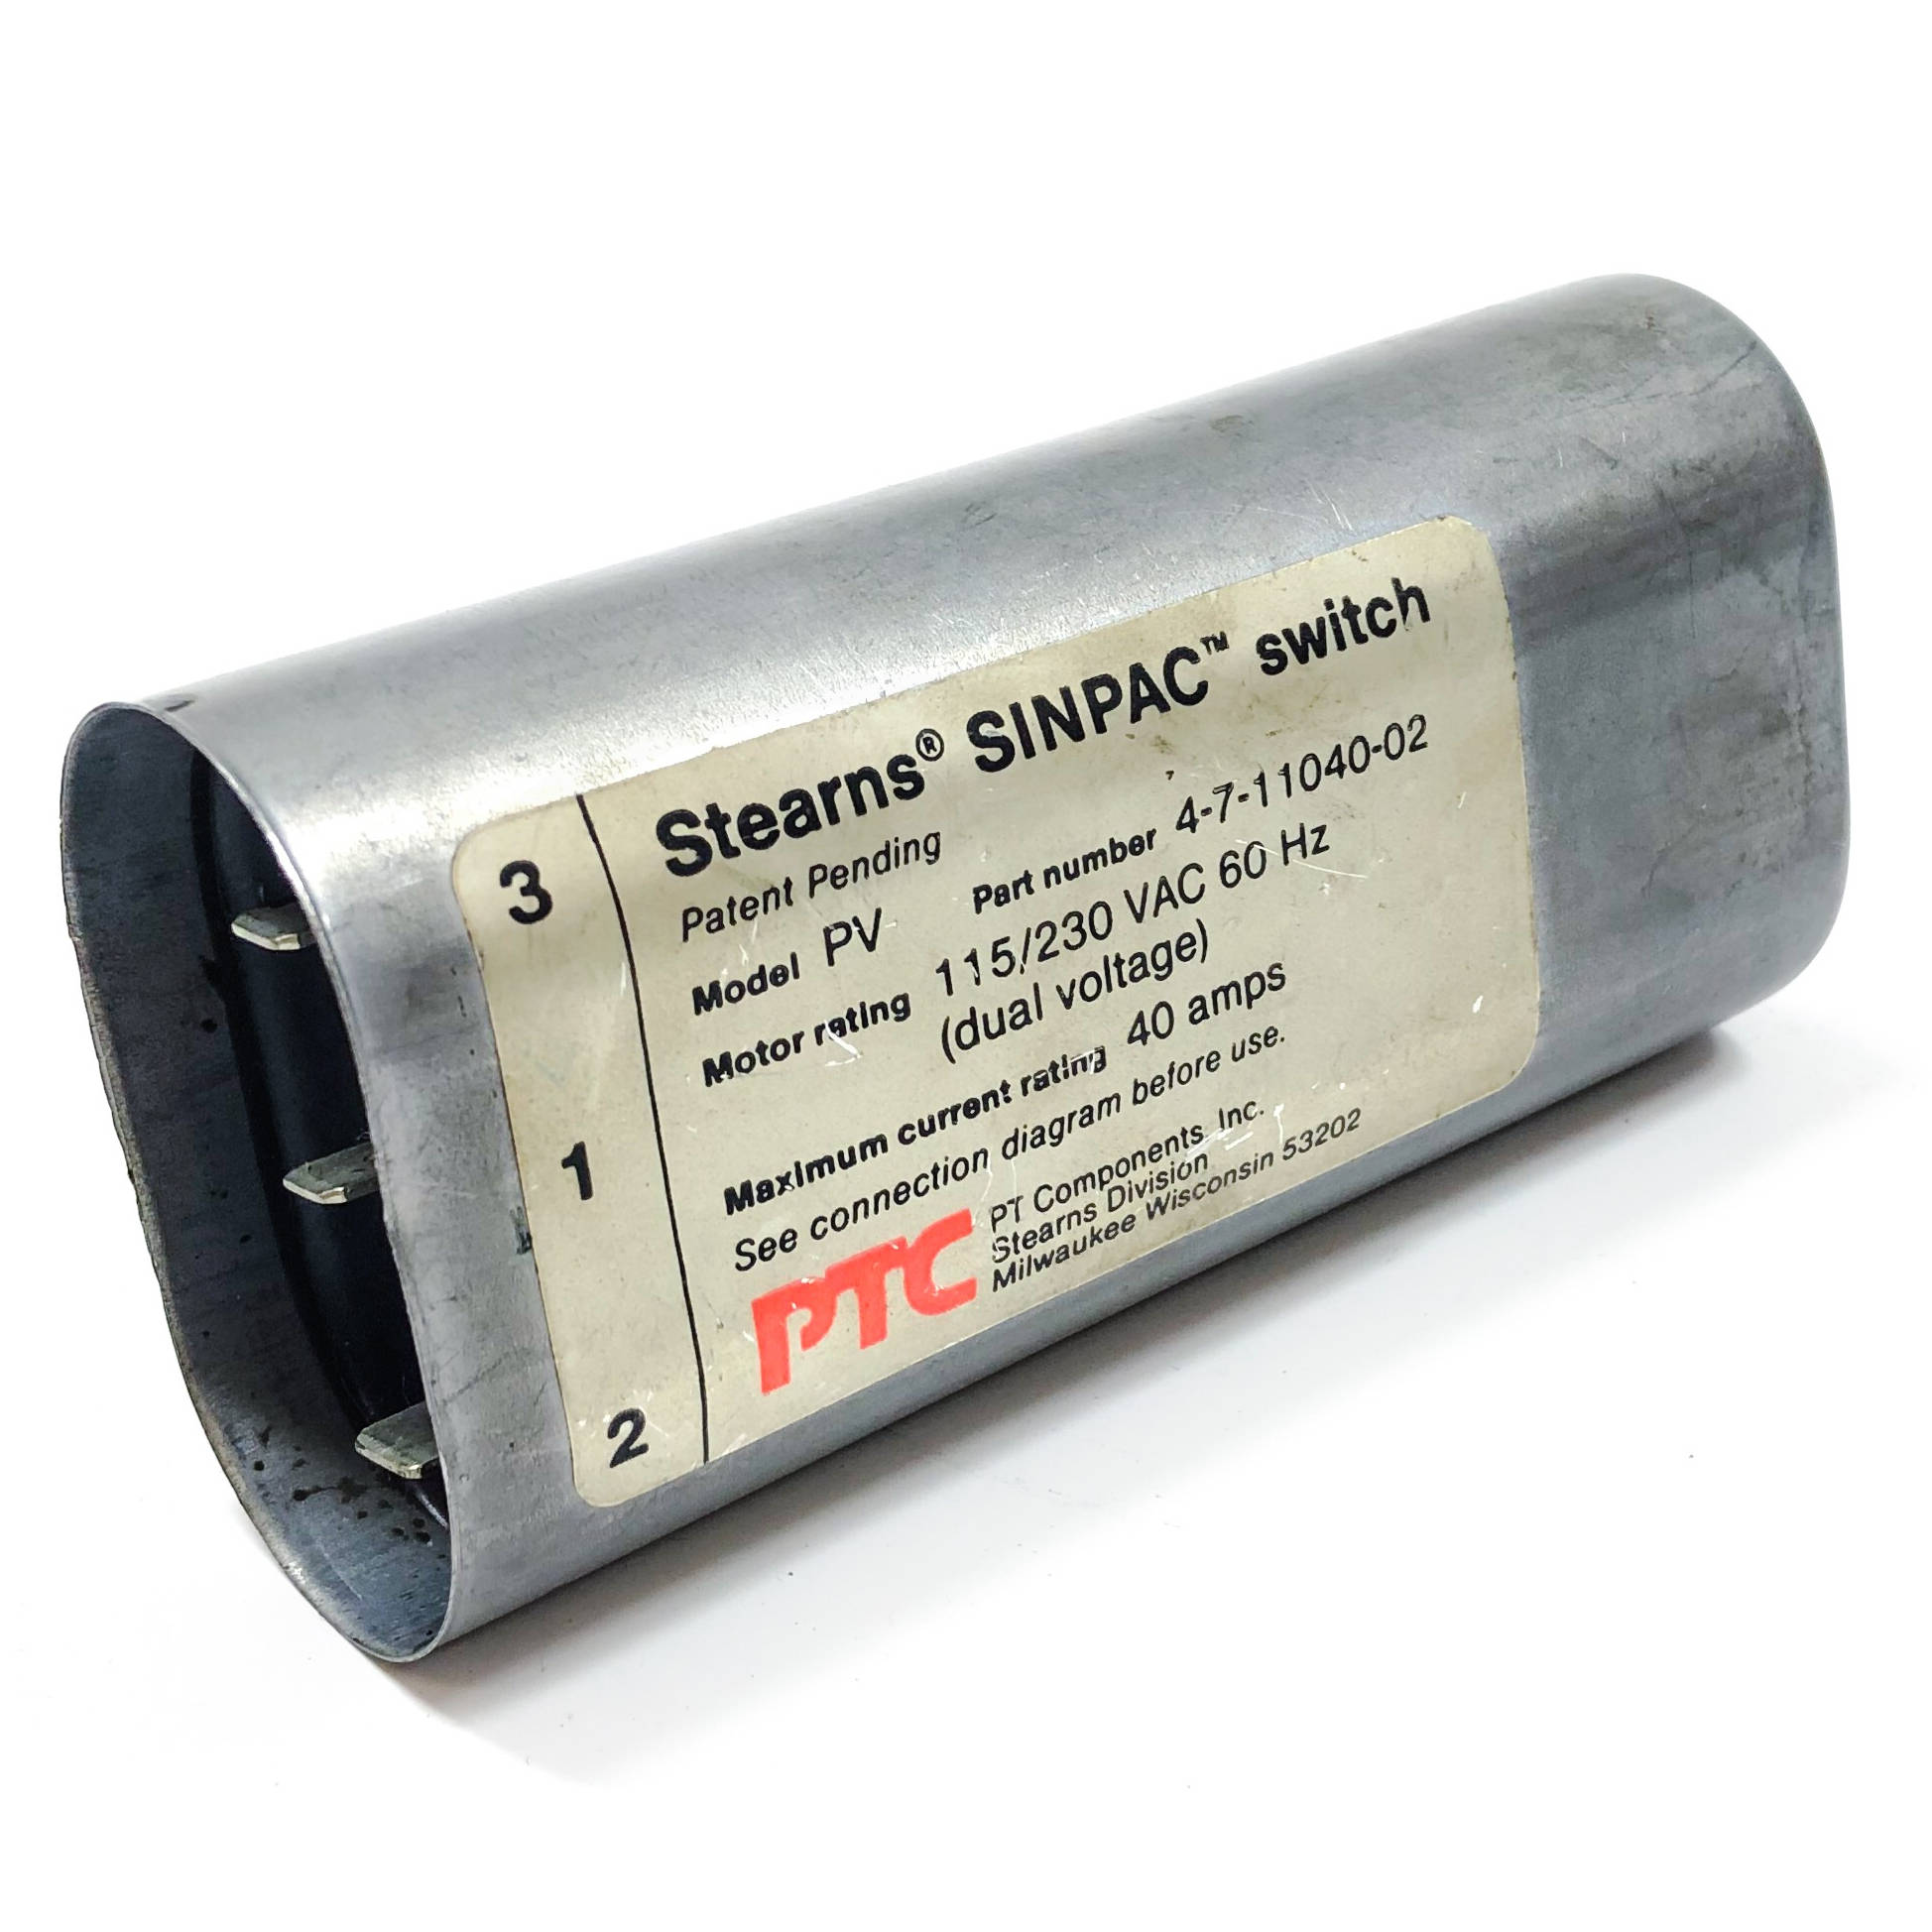 4-7-11040-02 Stearns PV Series SINPAC Switch 4